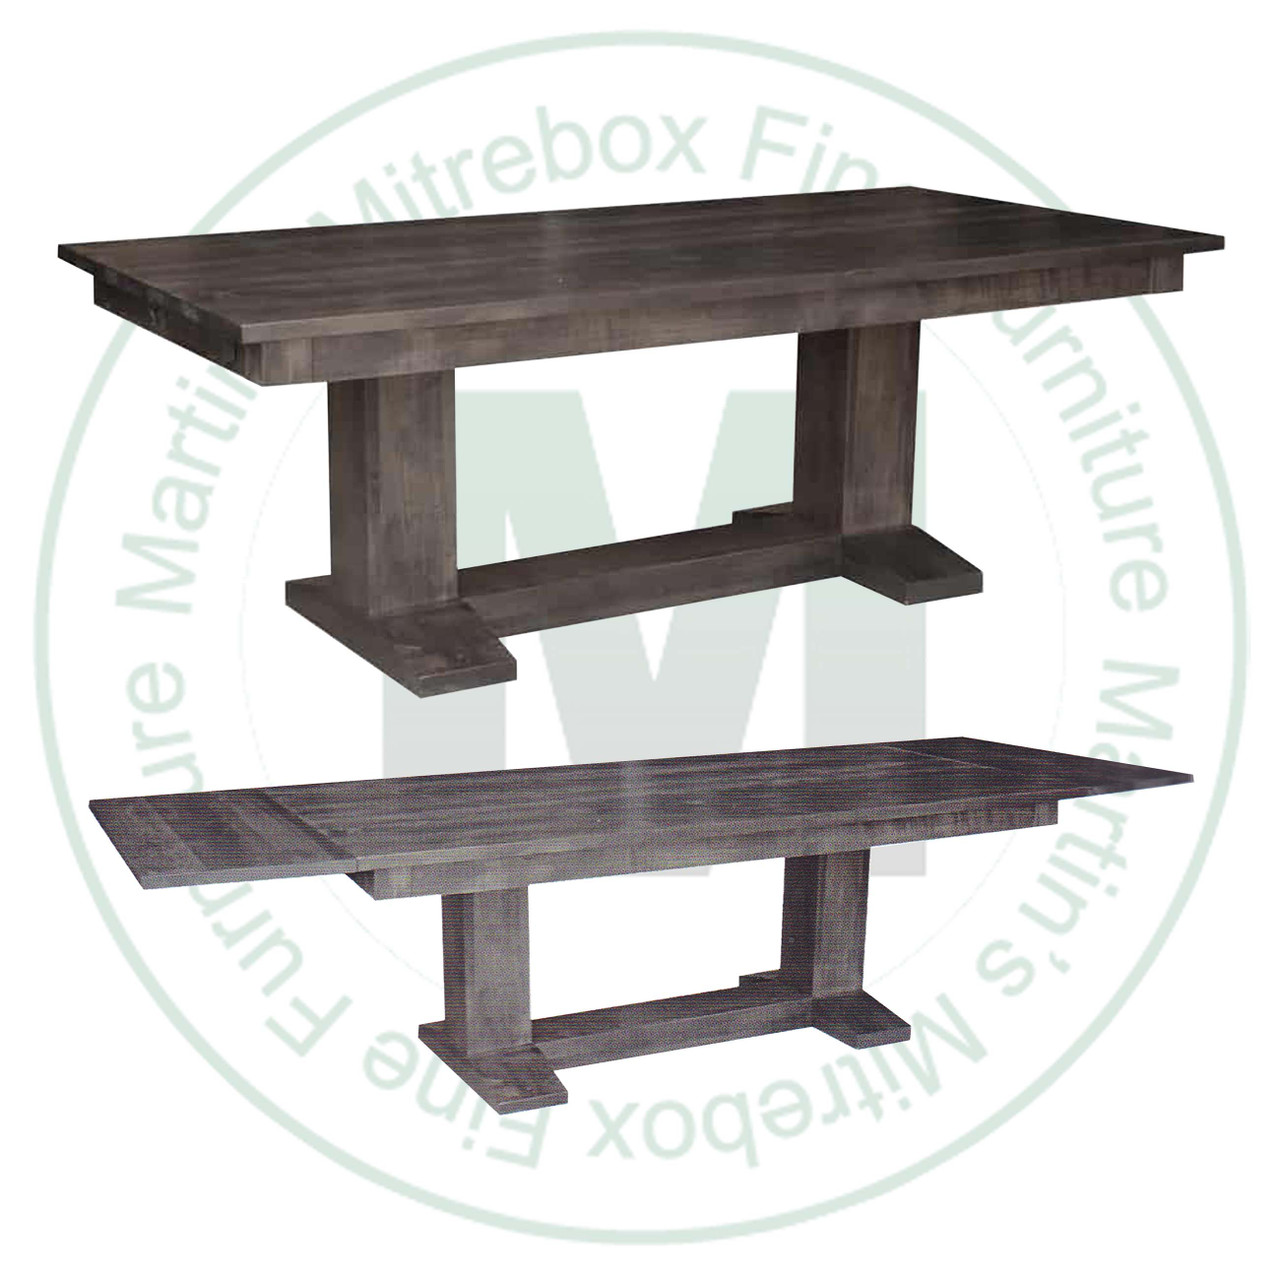 Oak Dakota Solid Top Pedestal Table 36'' Deep x 72'' Wide x 30'' High With 2 - 12'' Leaves.